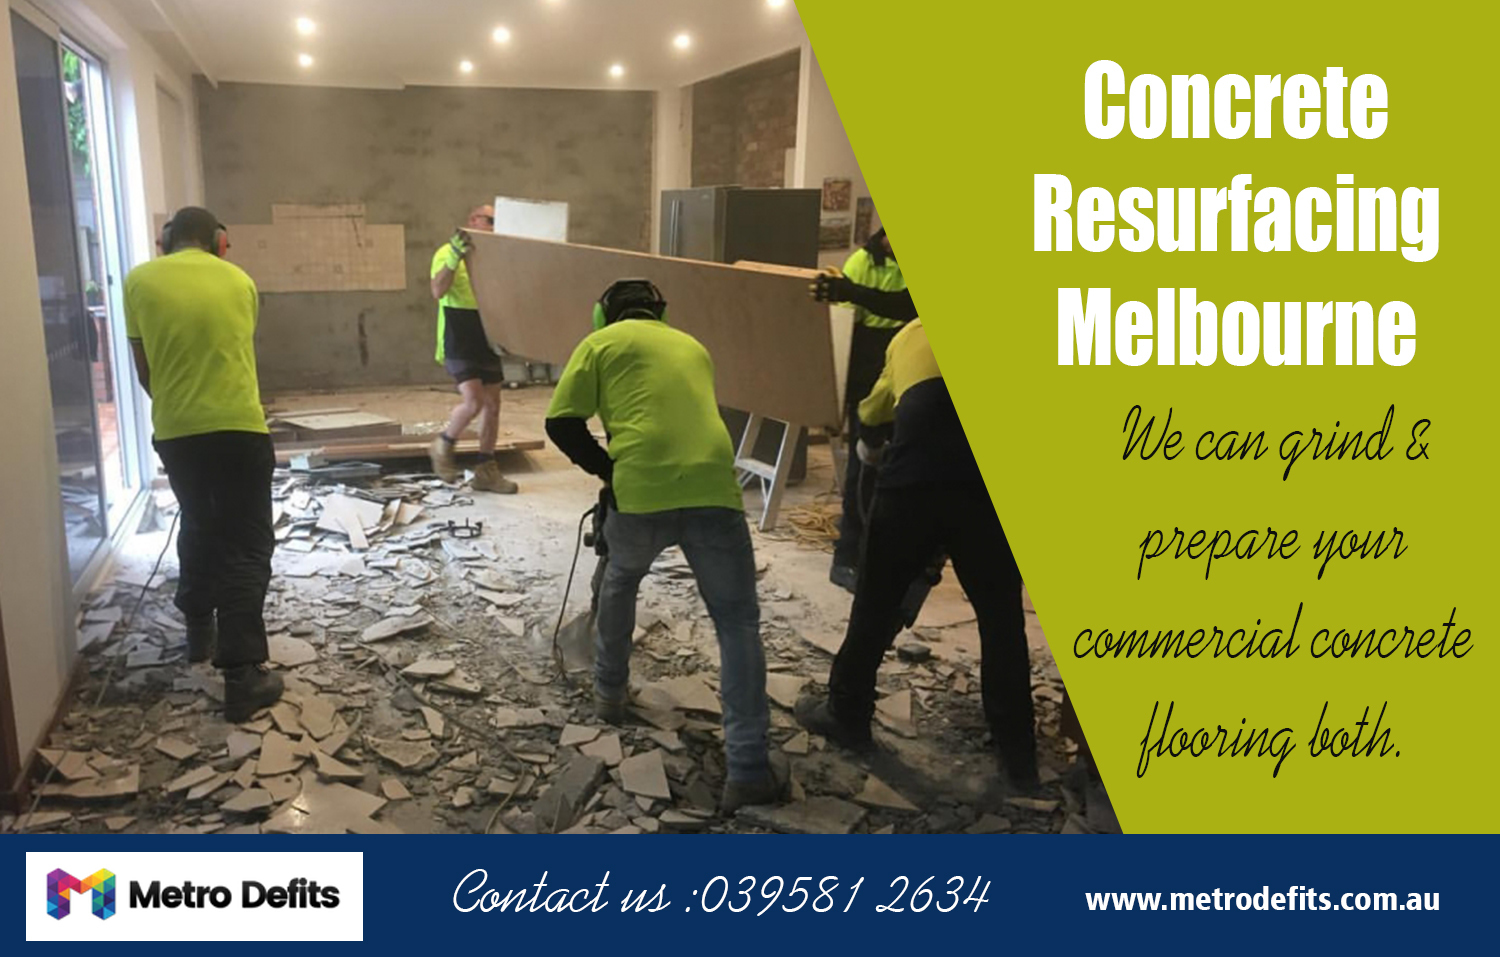 Concrete Resurfacing Melbourne